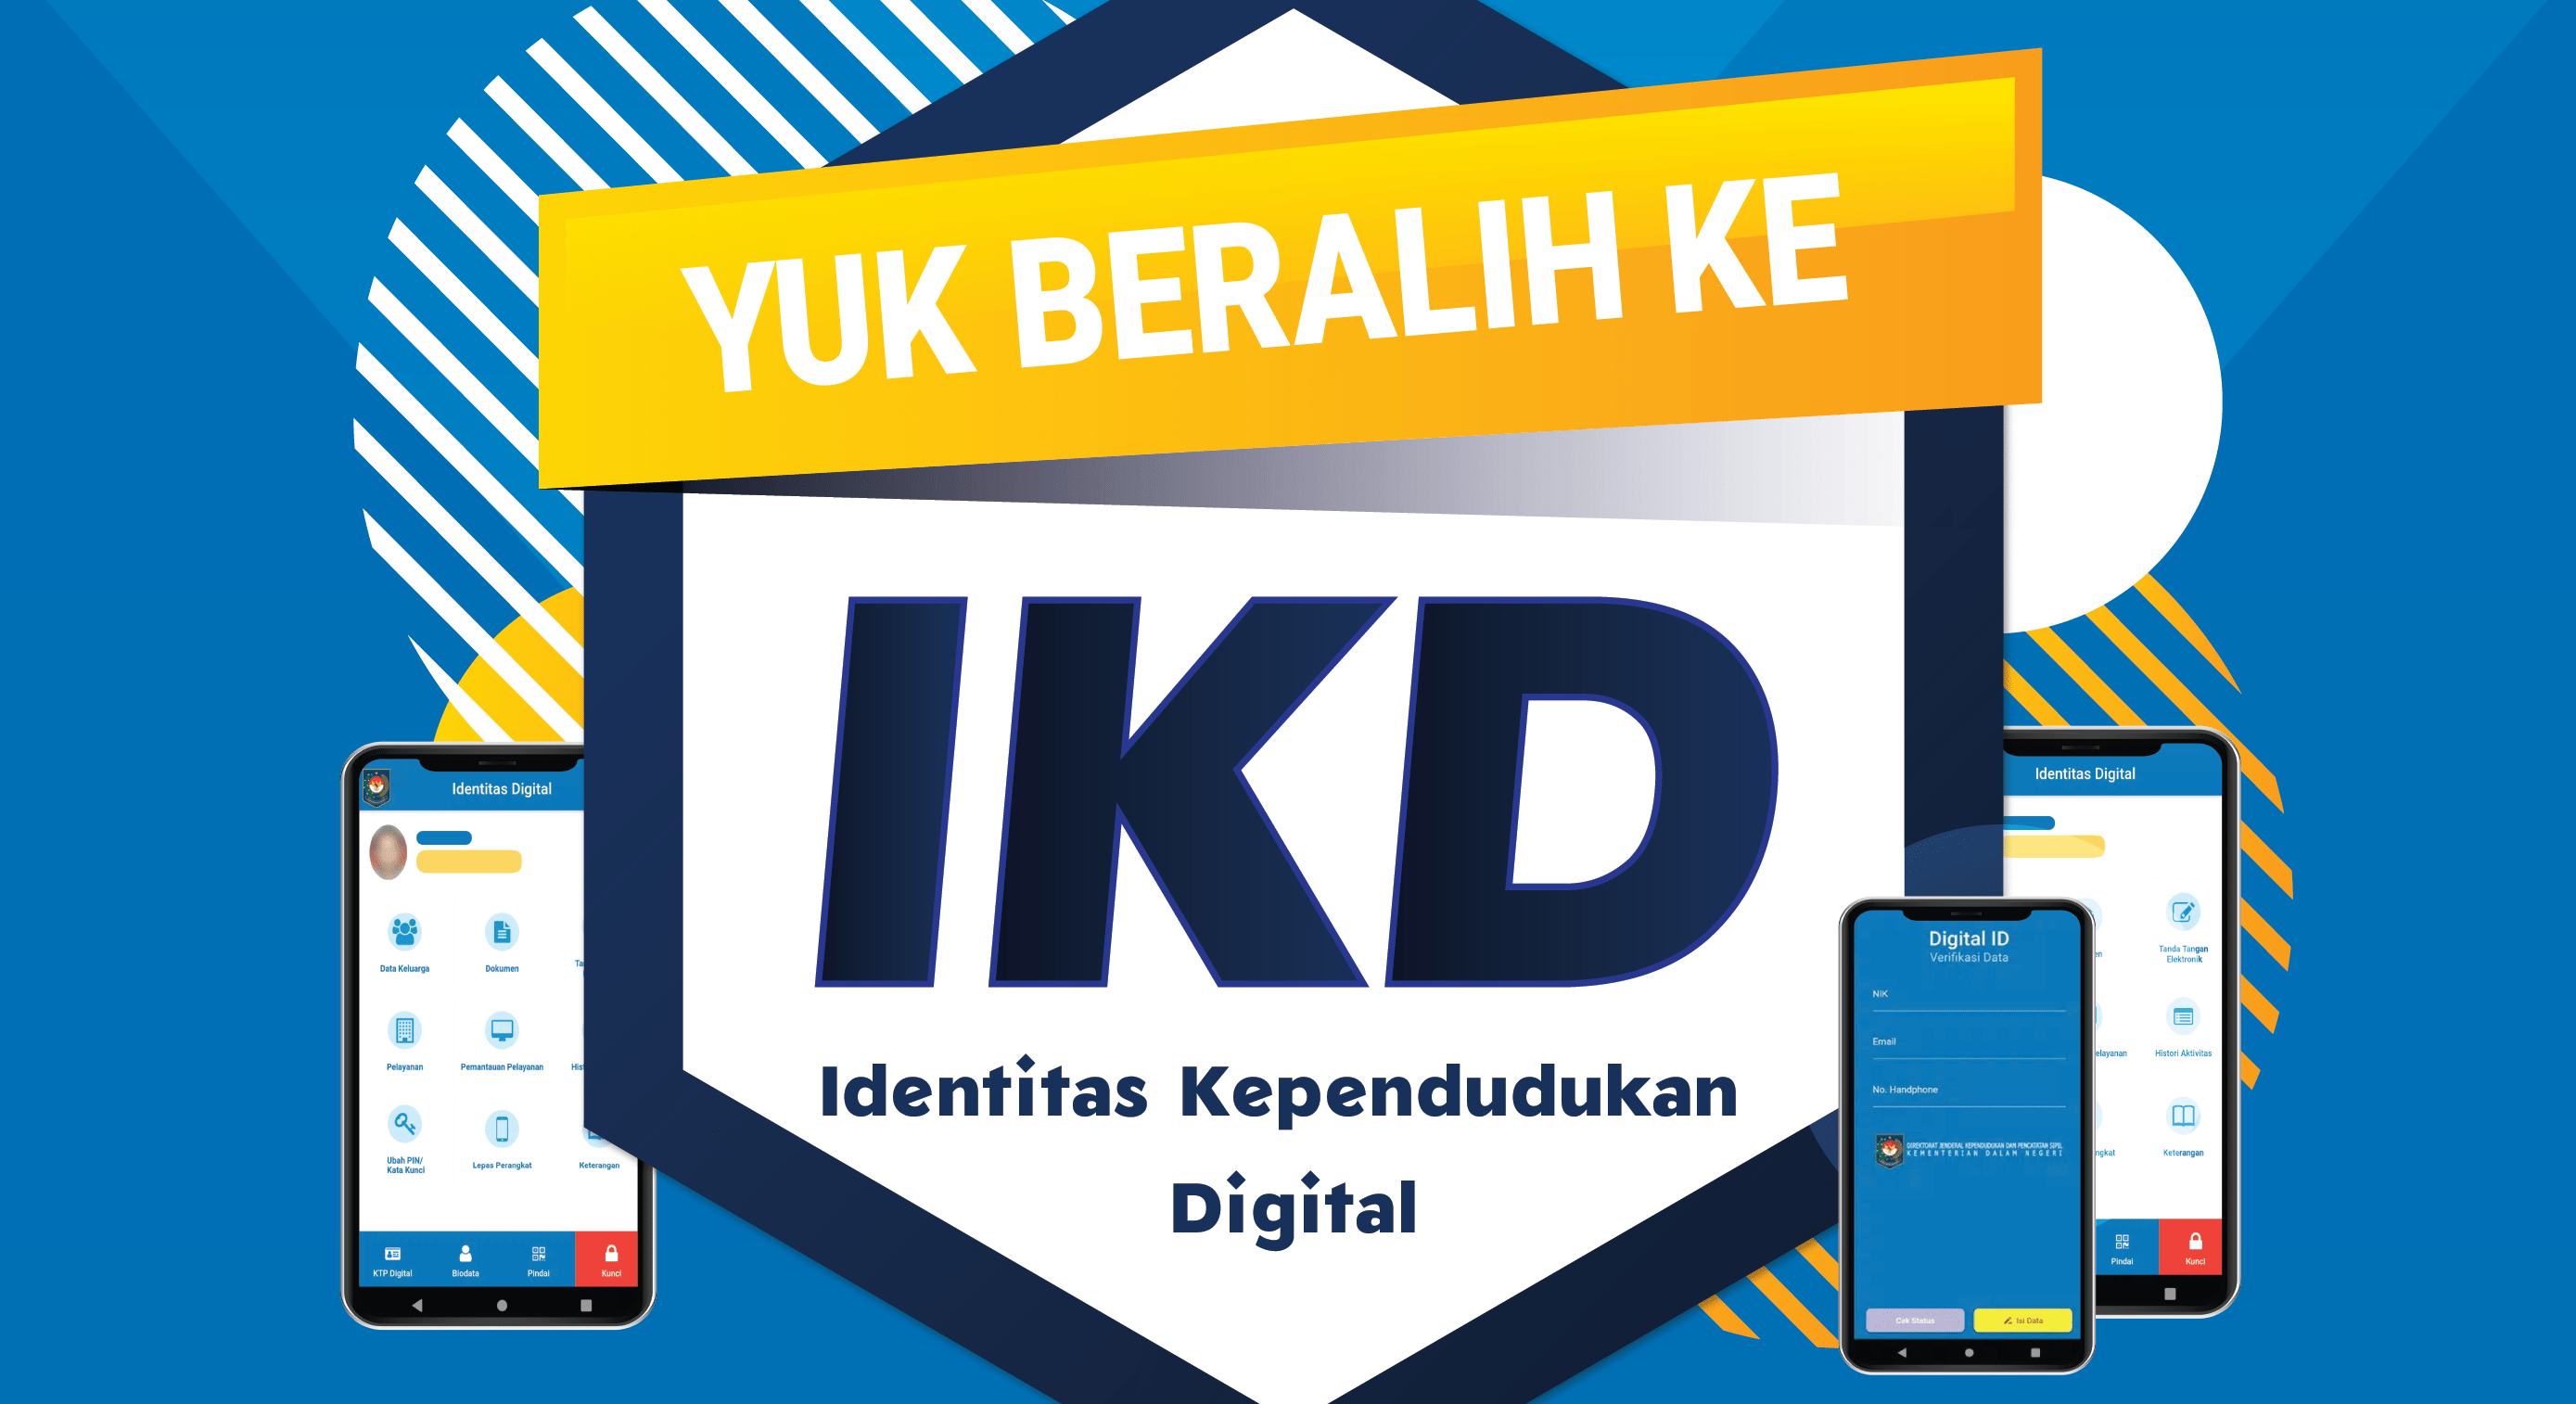 Ini Kata Jokowi Terkait Implementasi Identitas Digital